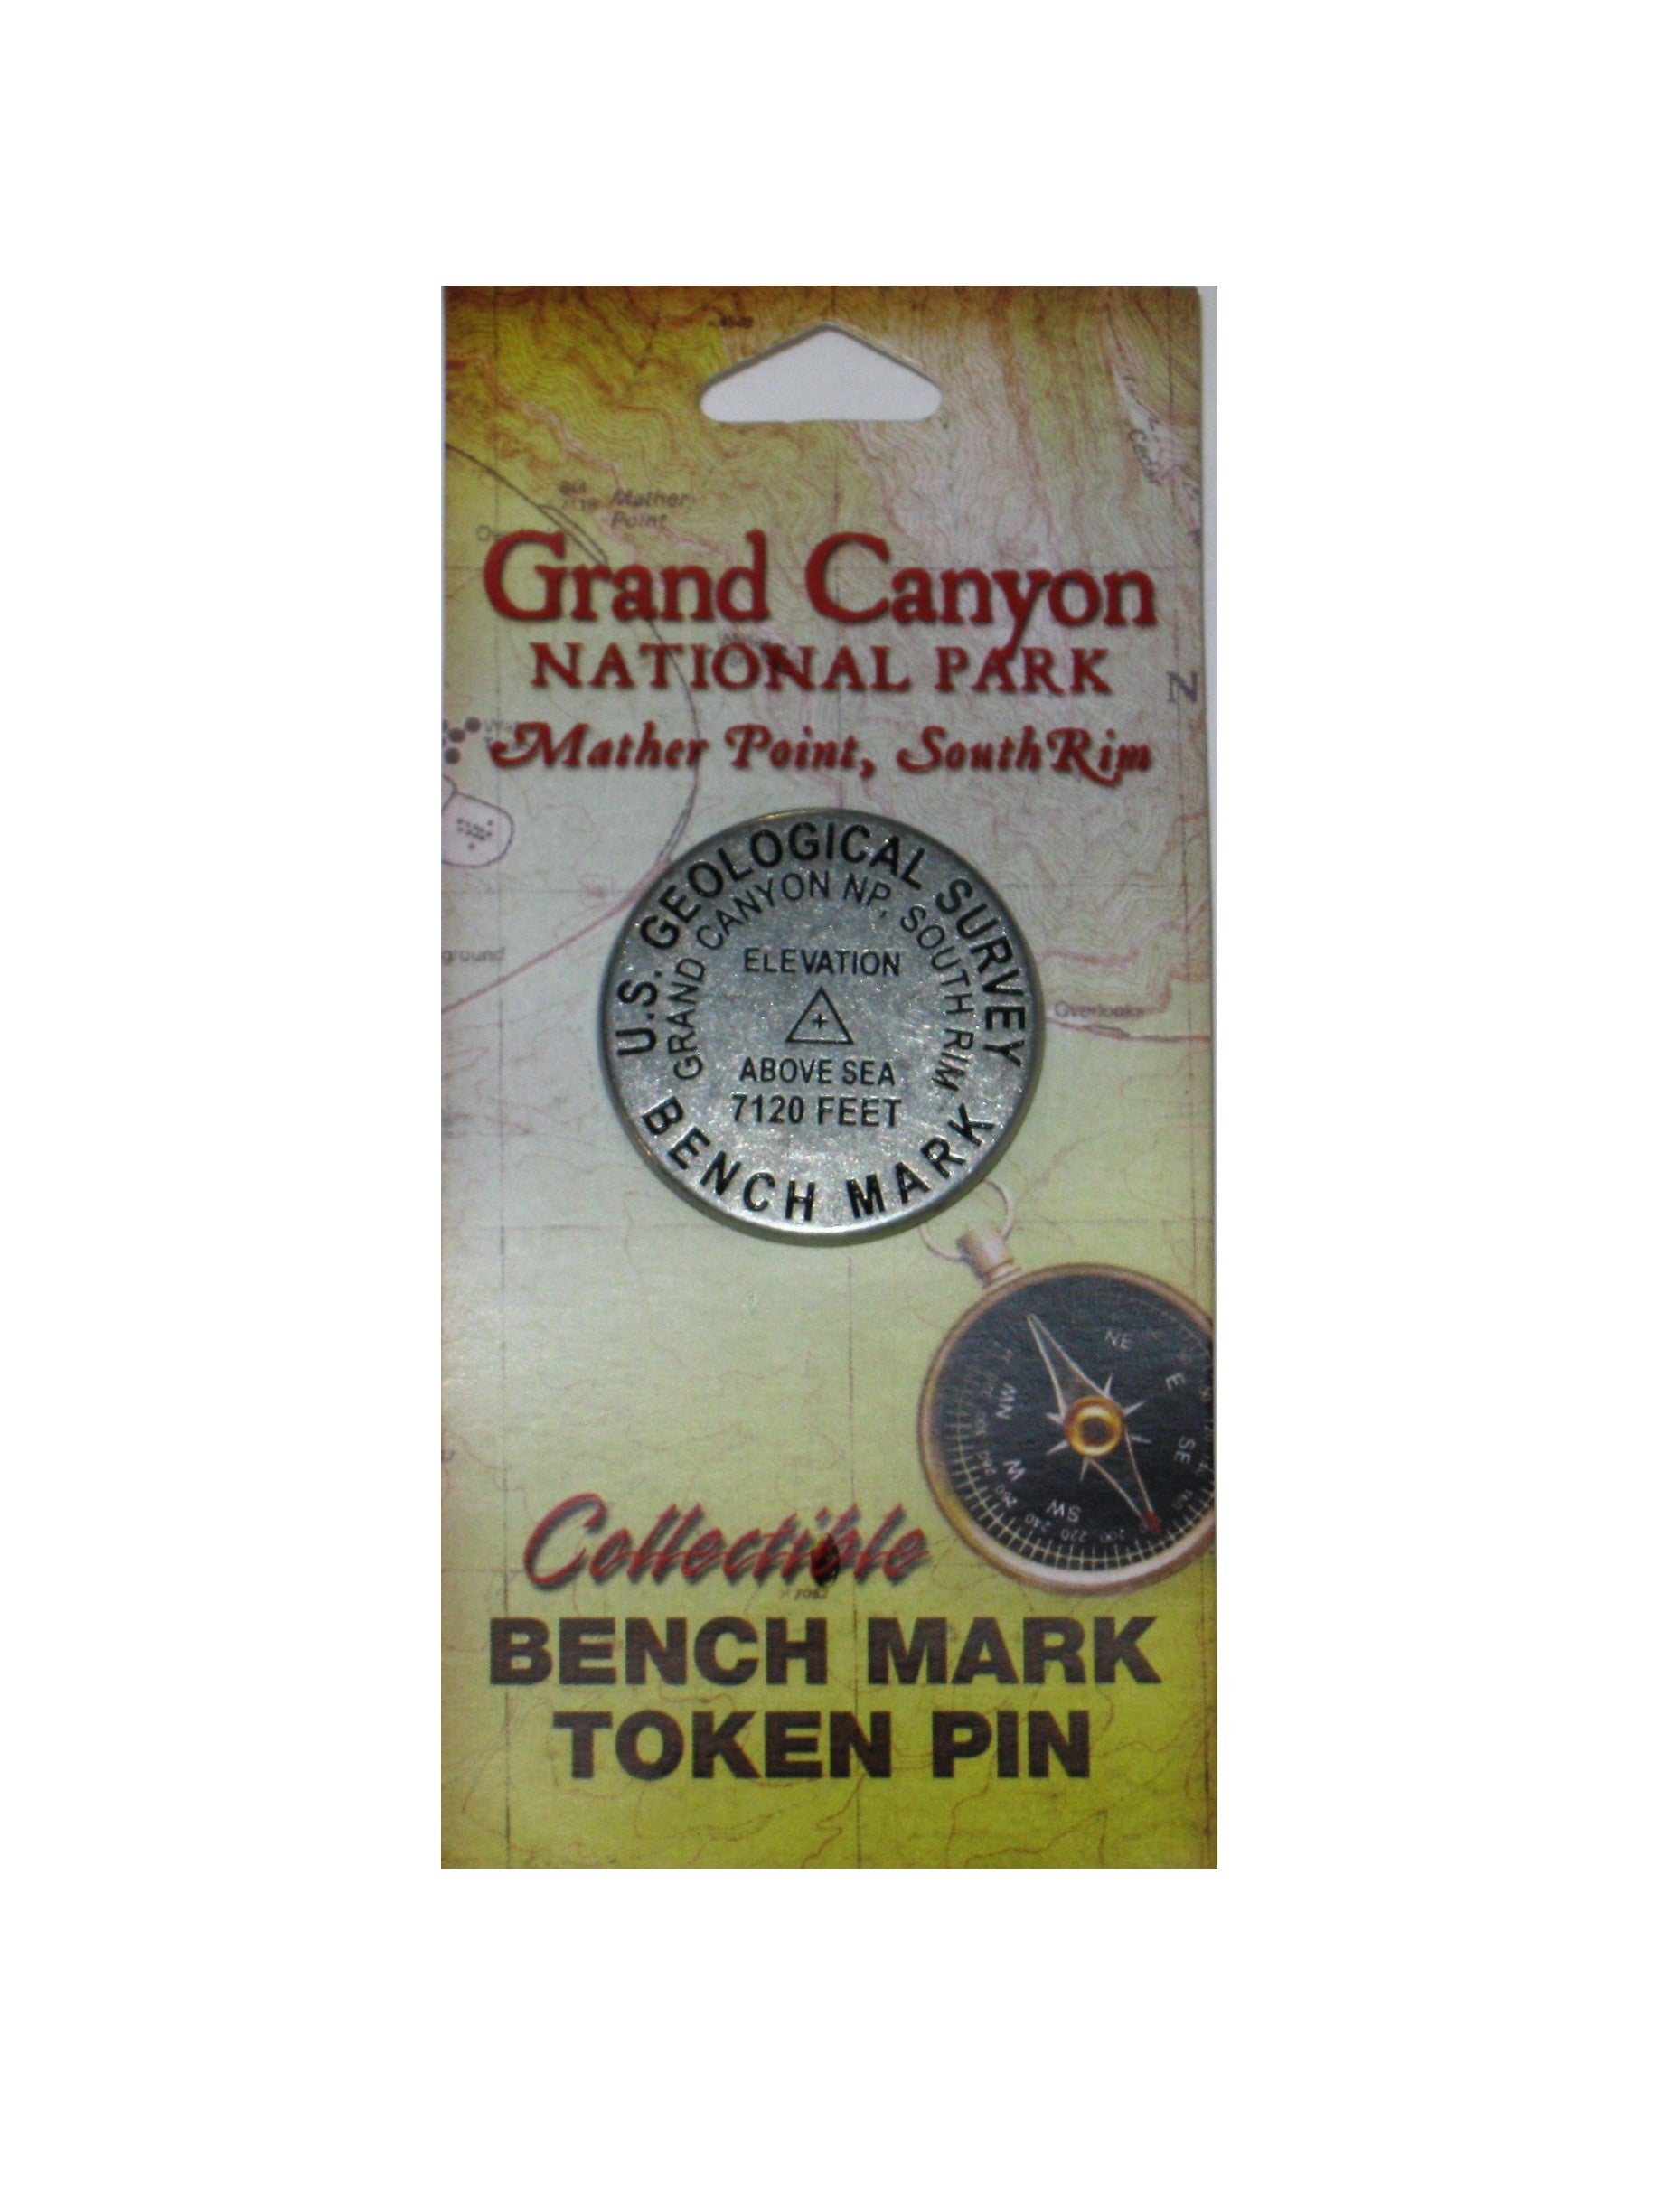 Bench Mark Token Pin: Mather Point, South Rim Grand Canyon